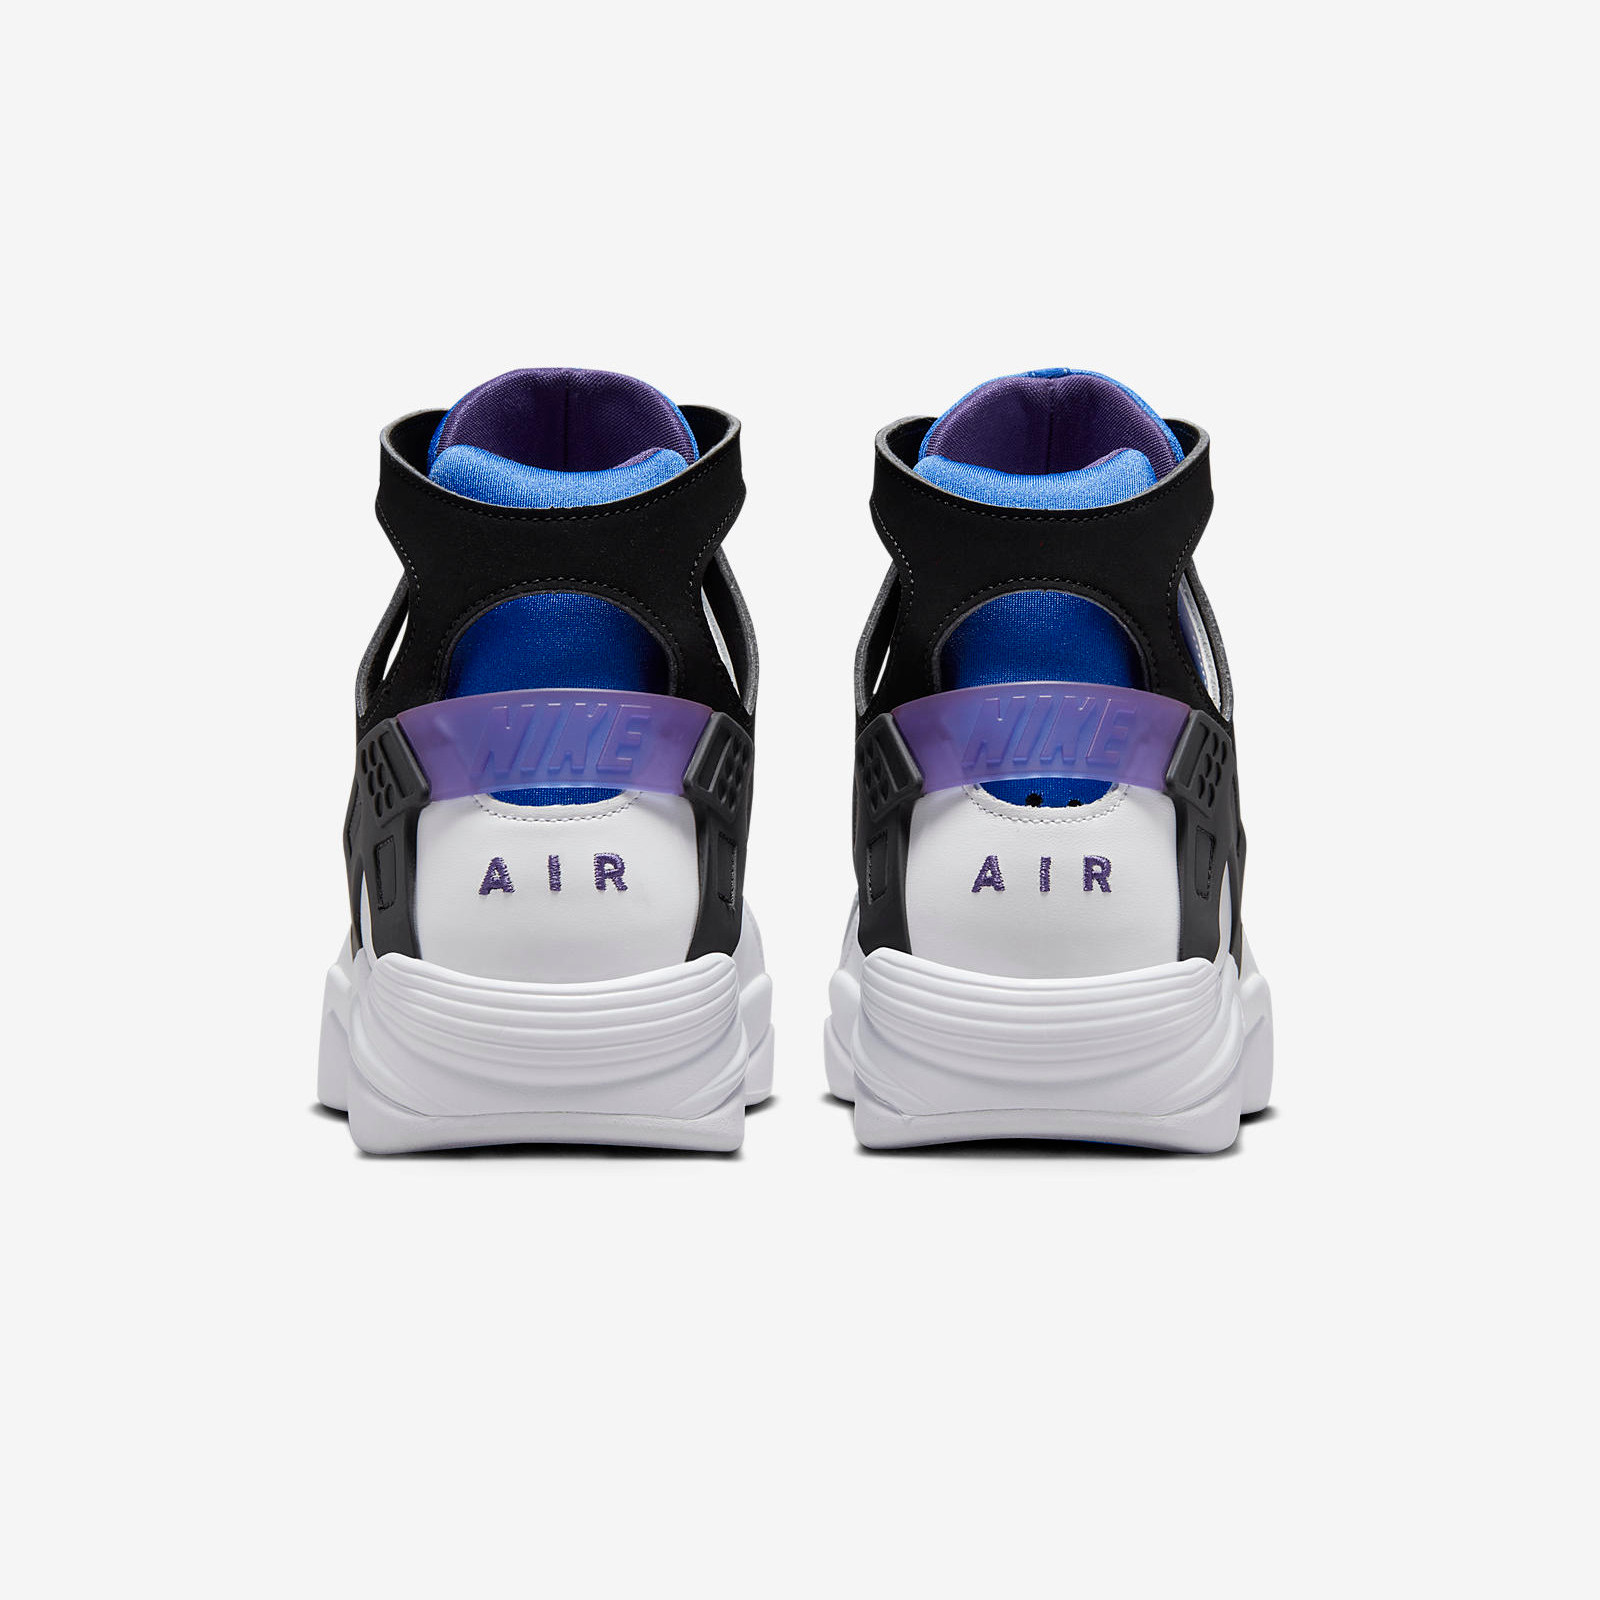 Nike Air Flight Huarache
Purple / Blue